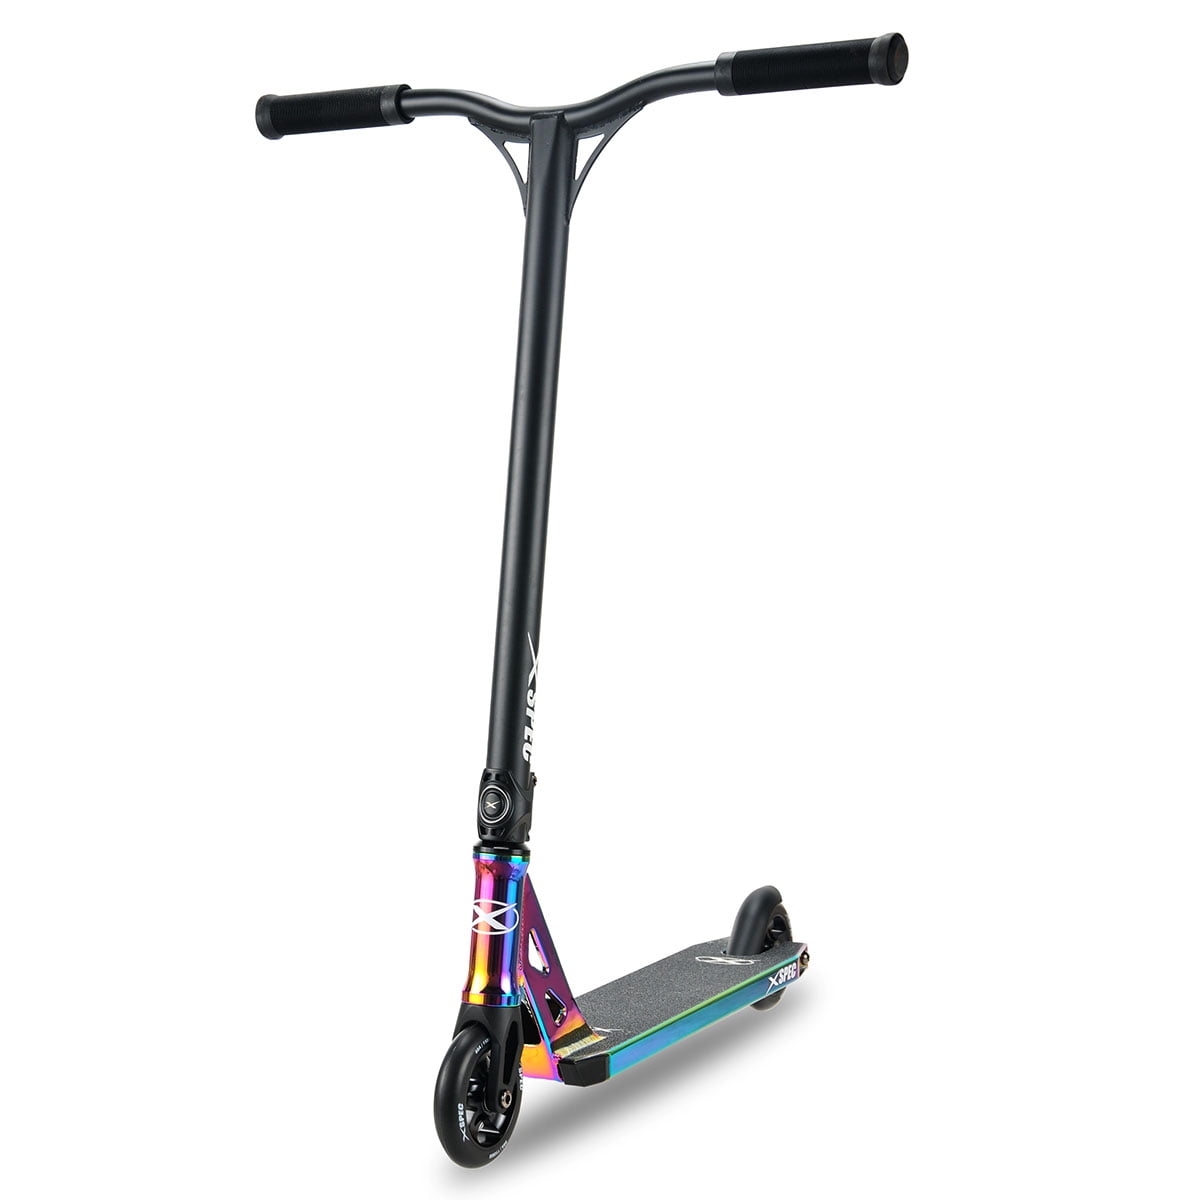 Xspec Chrome Pro Kick Stunt Scooter - Oil Slick Rainbow Anodized Design, -